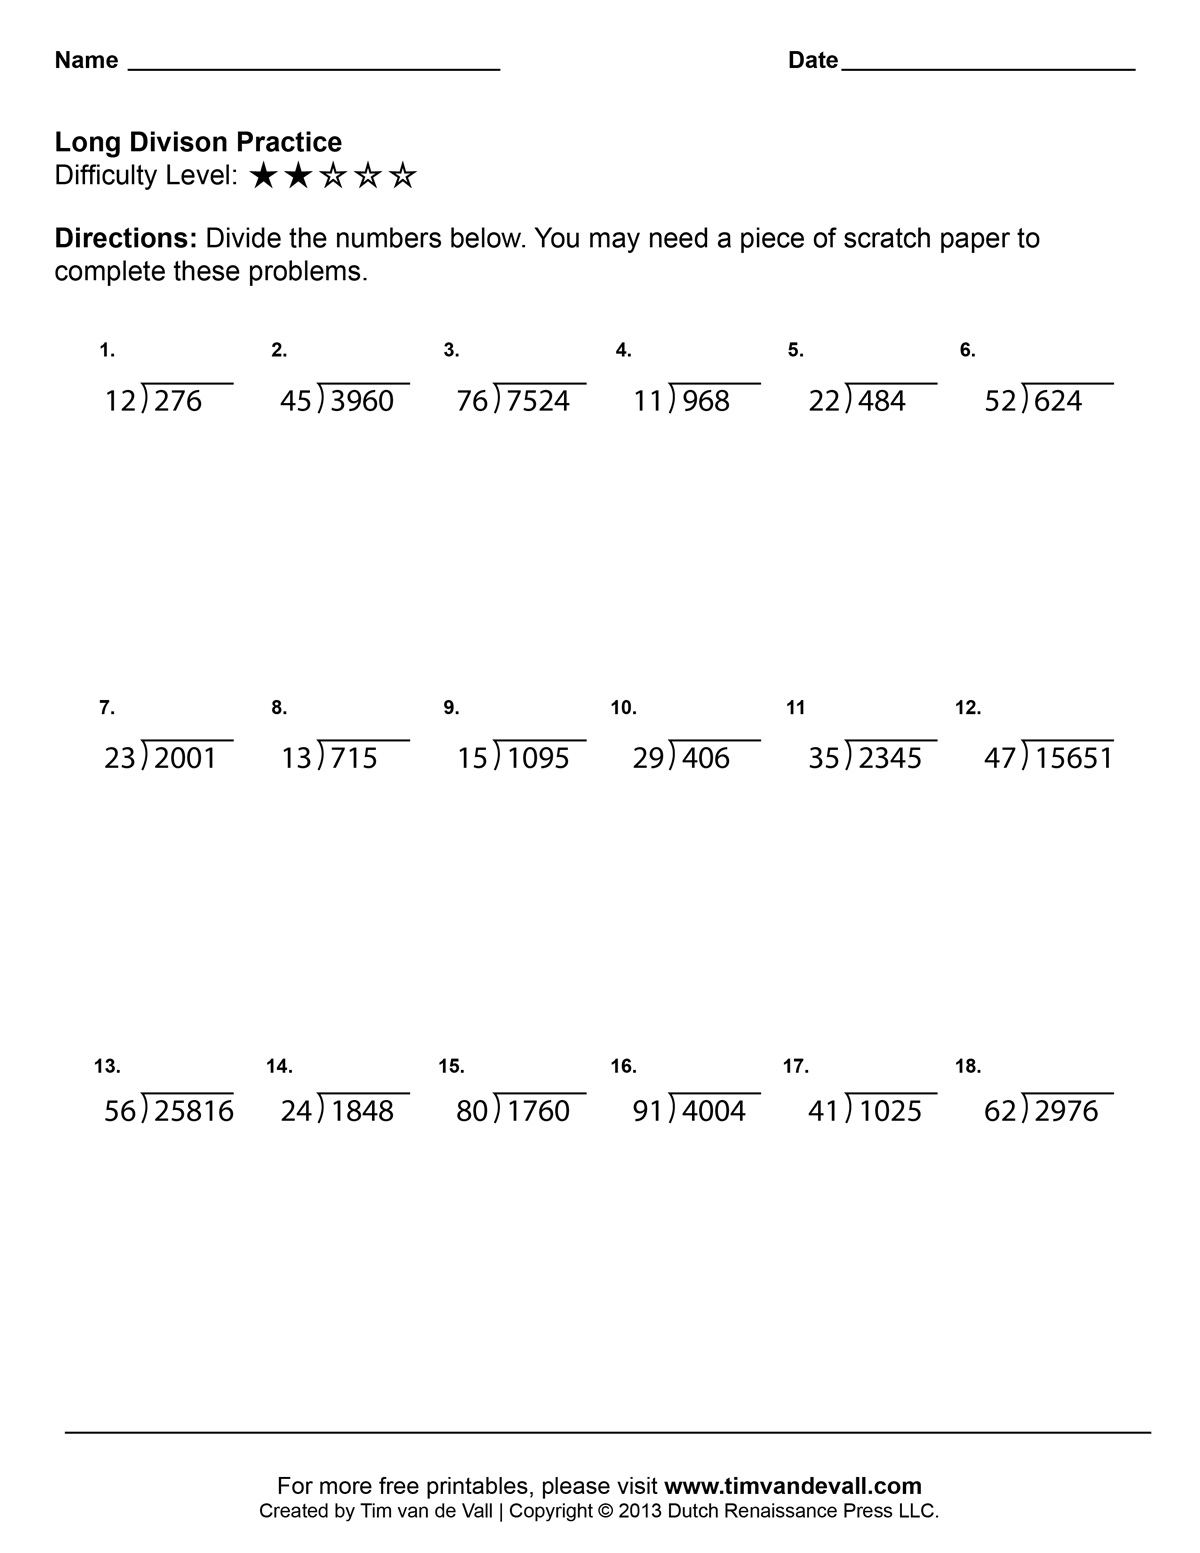 Long Division Worksheets 3rd Grade Image